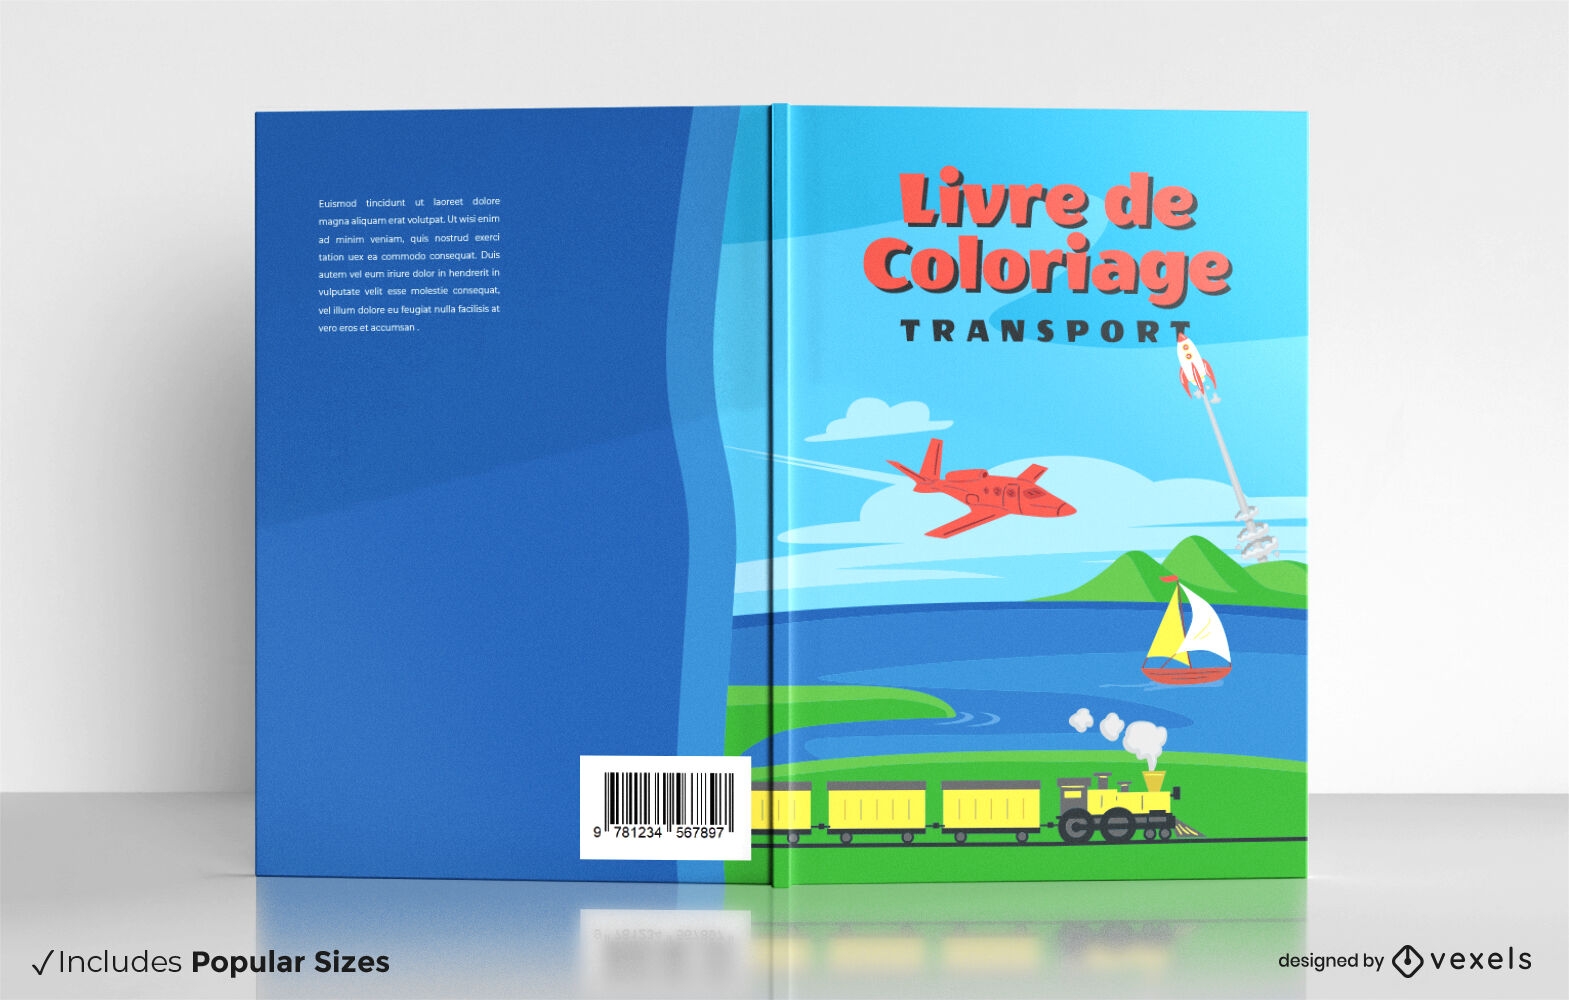 Transport coloring book cover design